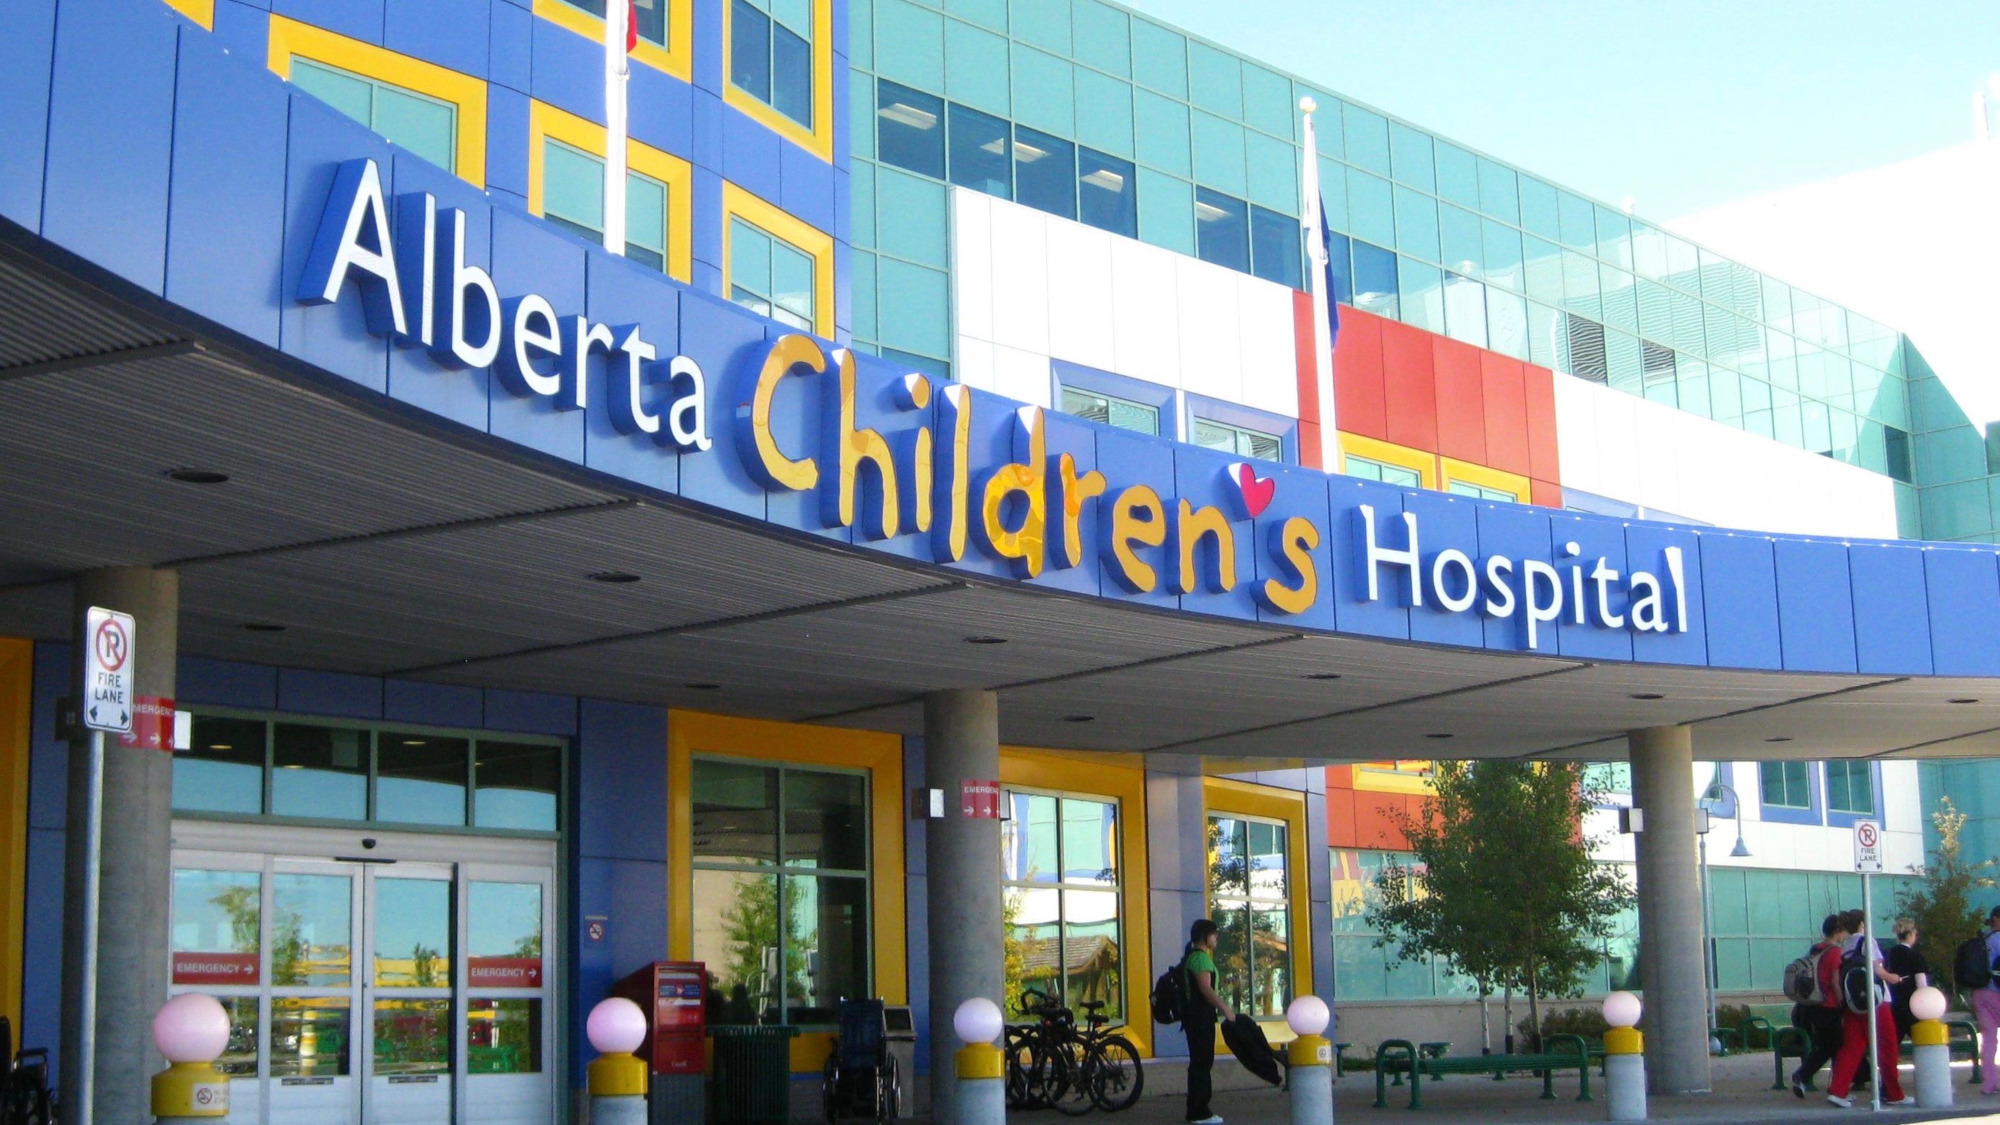 Alberta Children’s Hospital